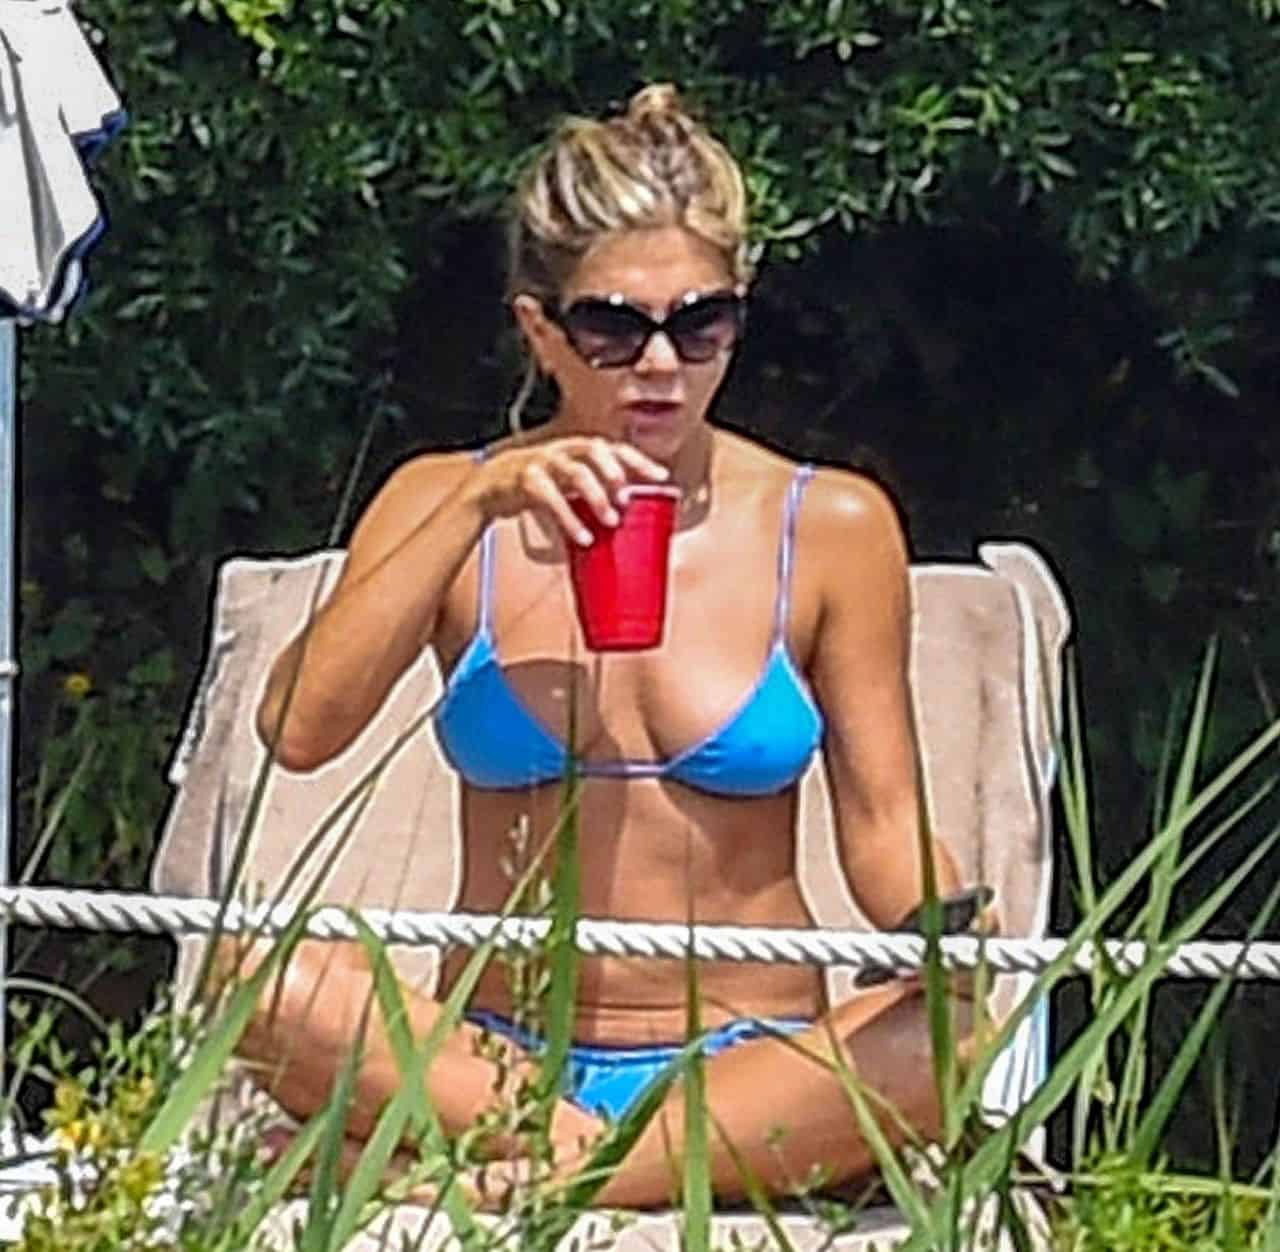 Jennifer Aniston Rocks a Blue Bikini While Relaxing Poolside in Portofino